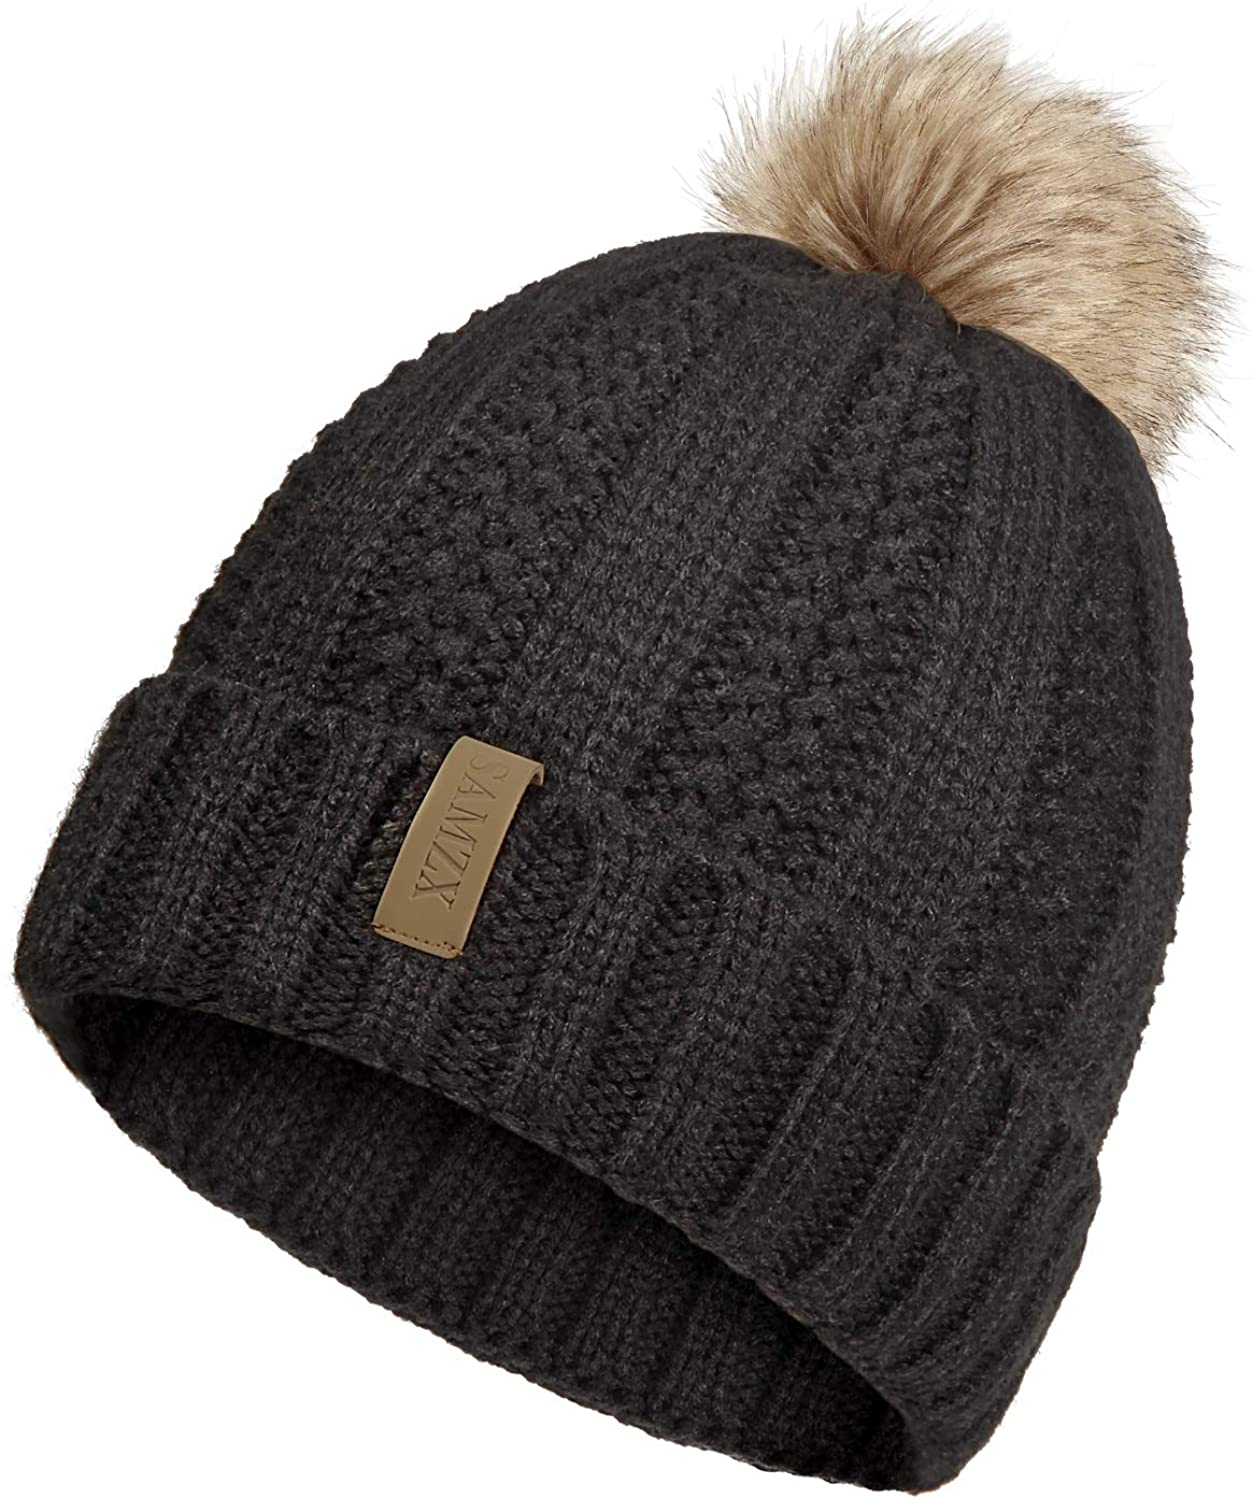 Womens Faux Fur Pompom Cable Knit Winter Beanie Hat 